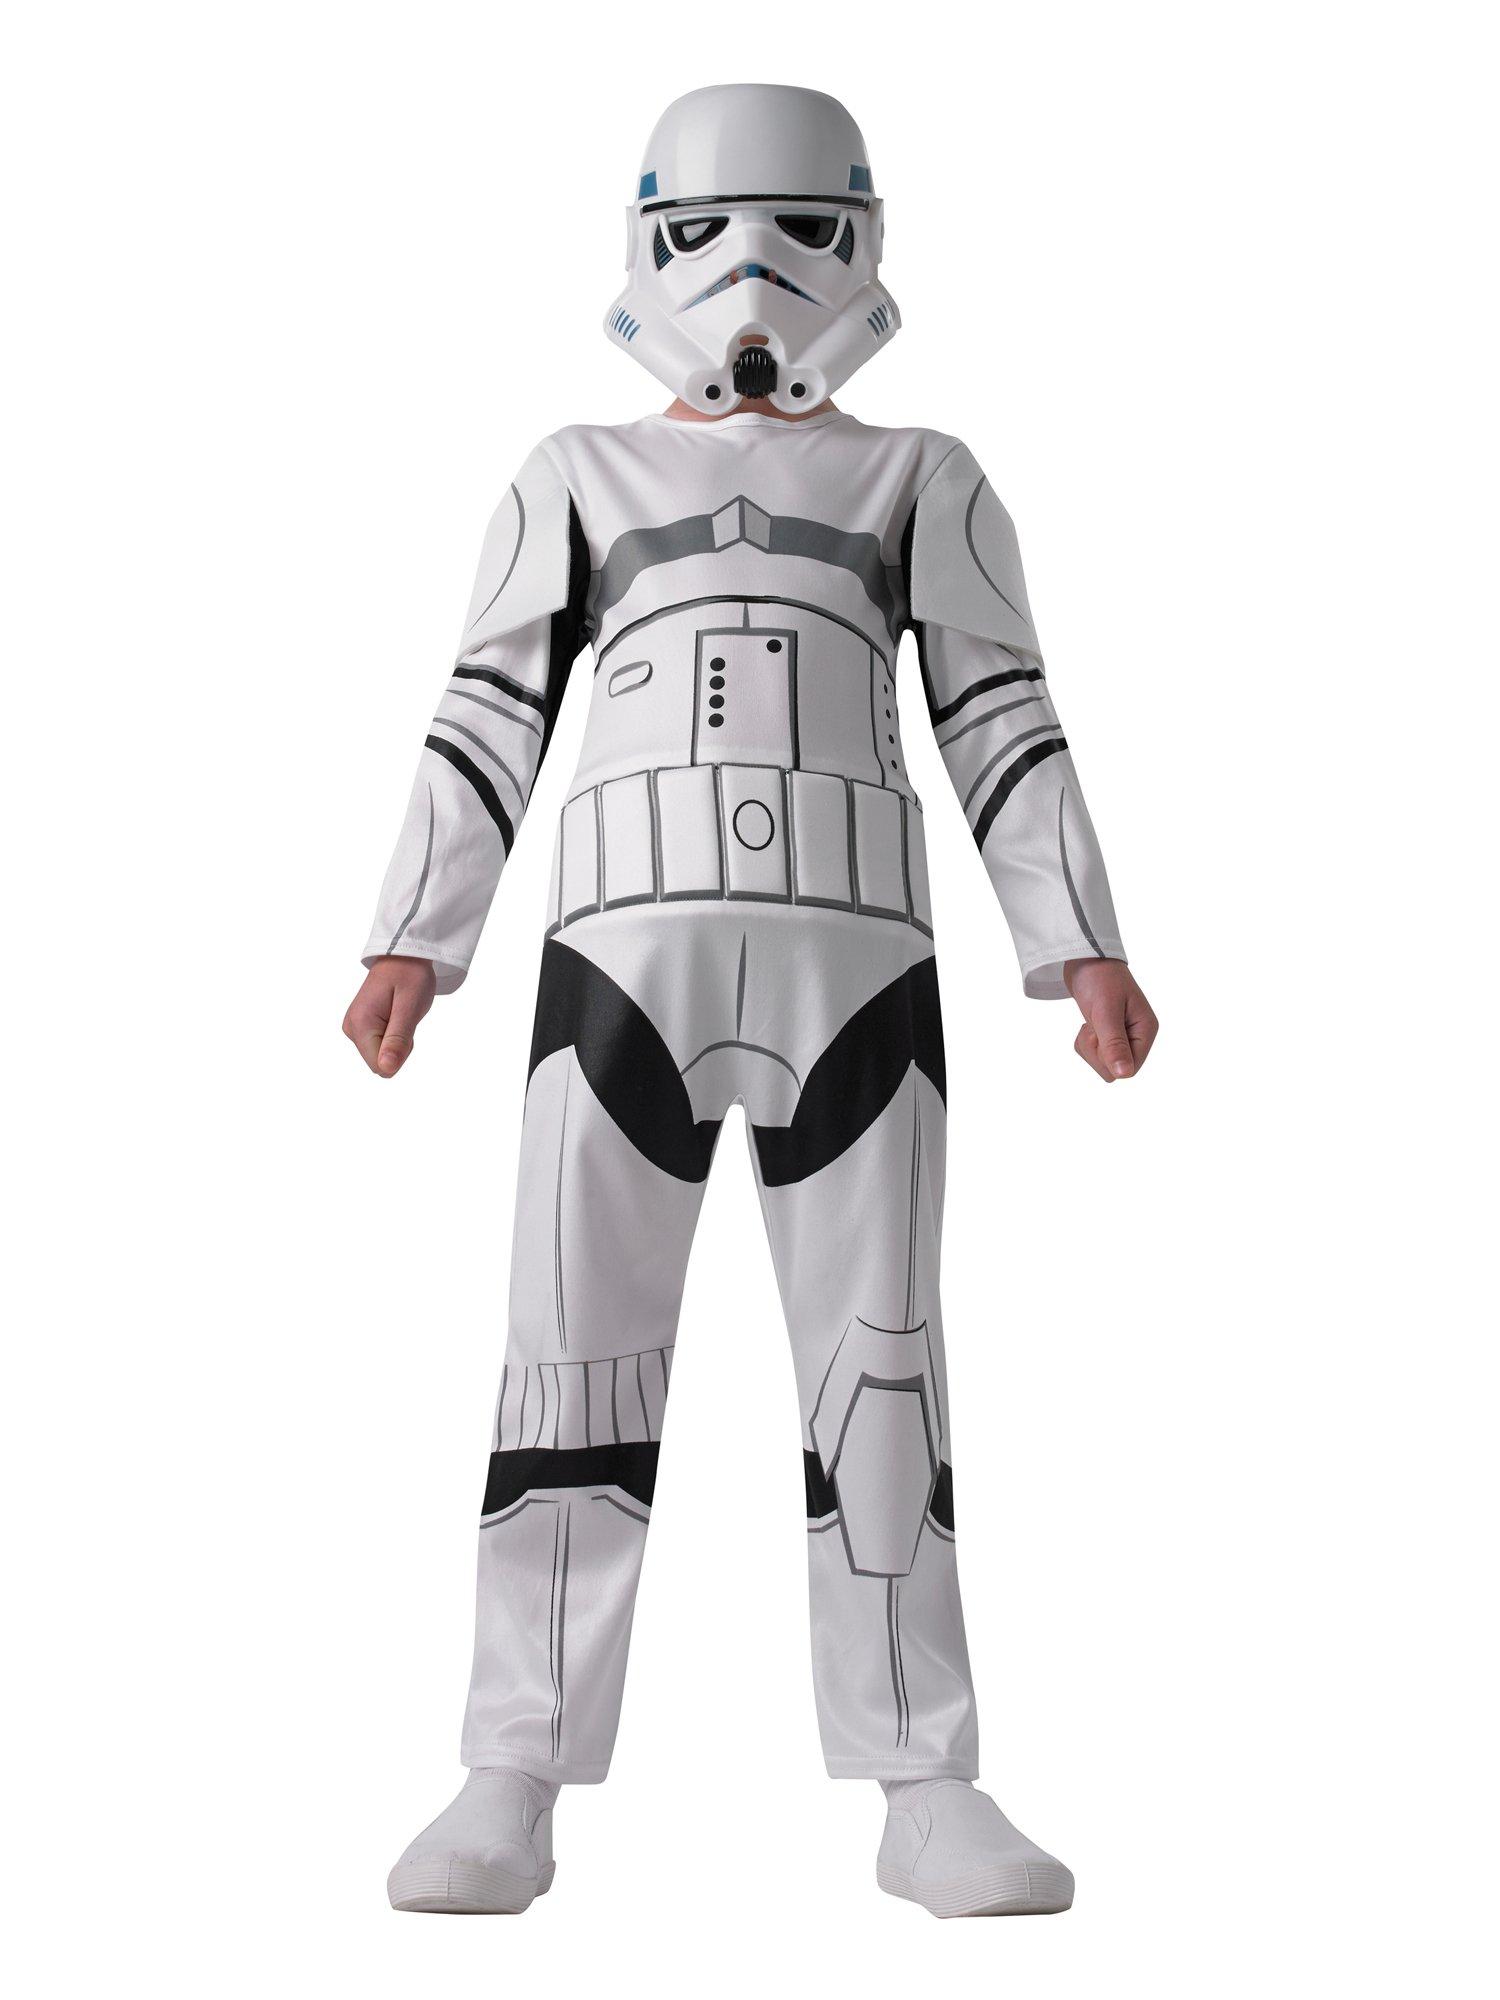 Kids Stormtrooper Costume From Star Wars